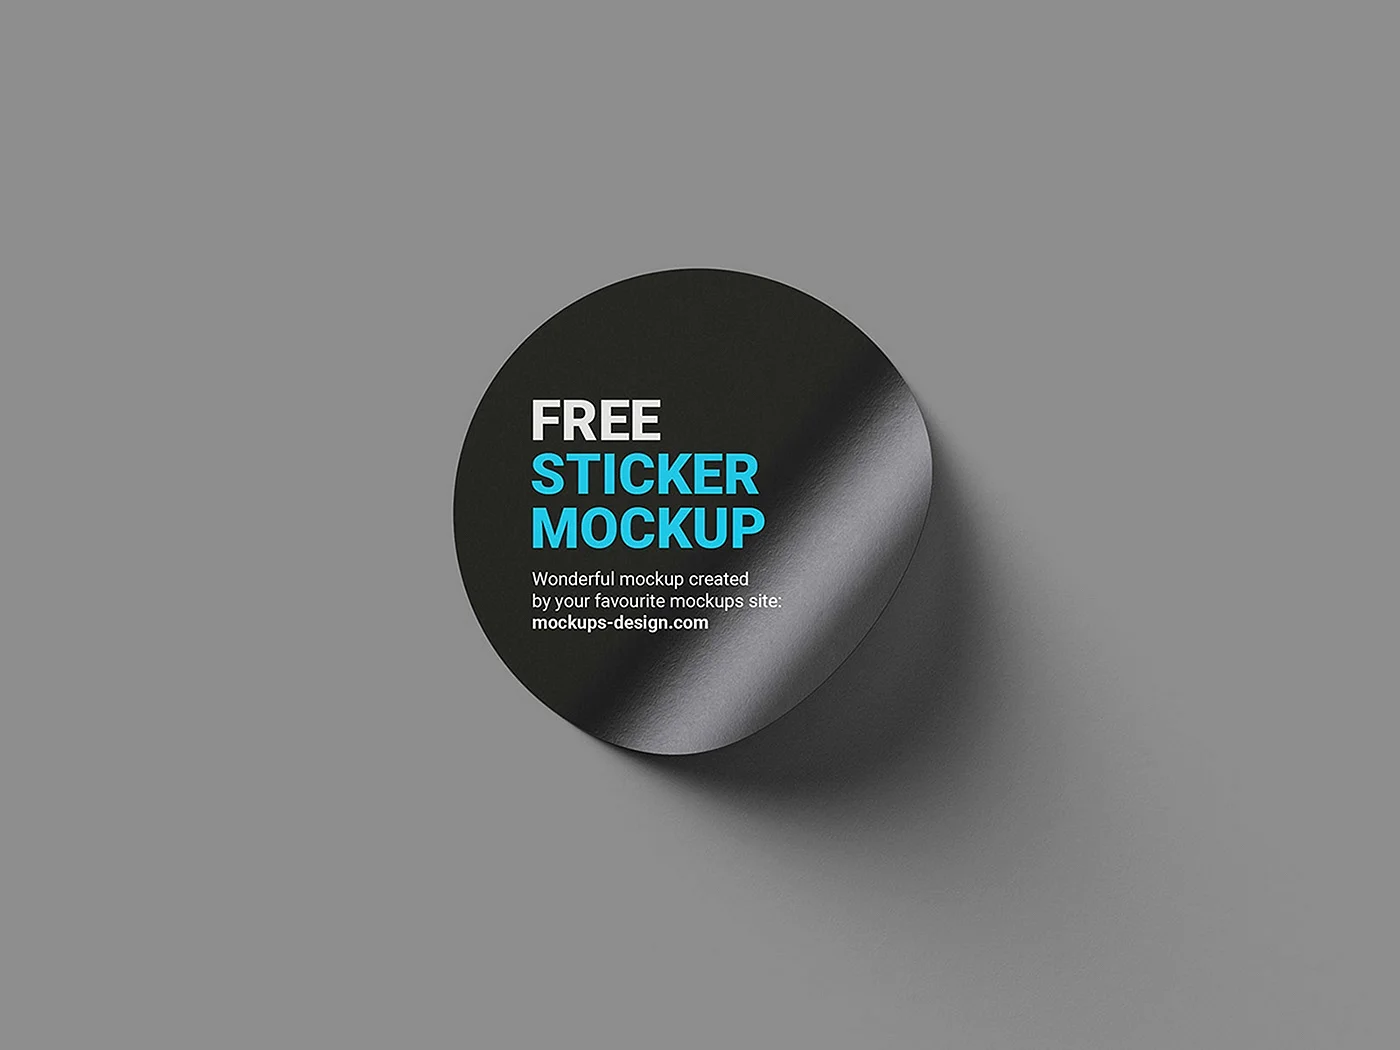 Sticker Mockup free